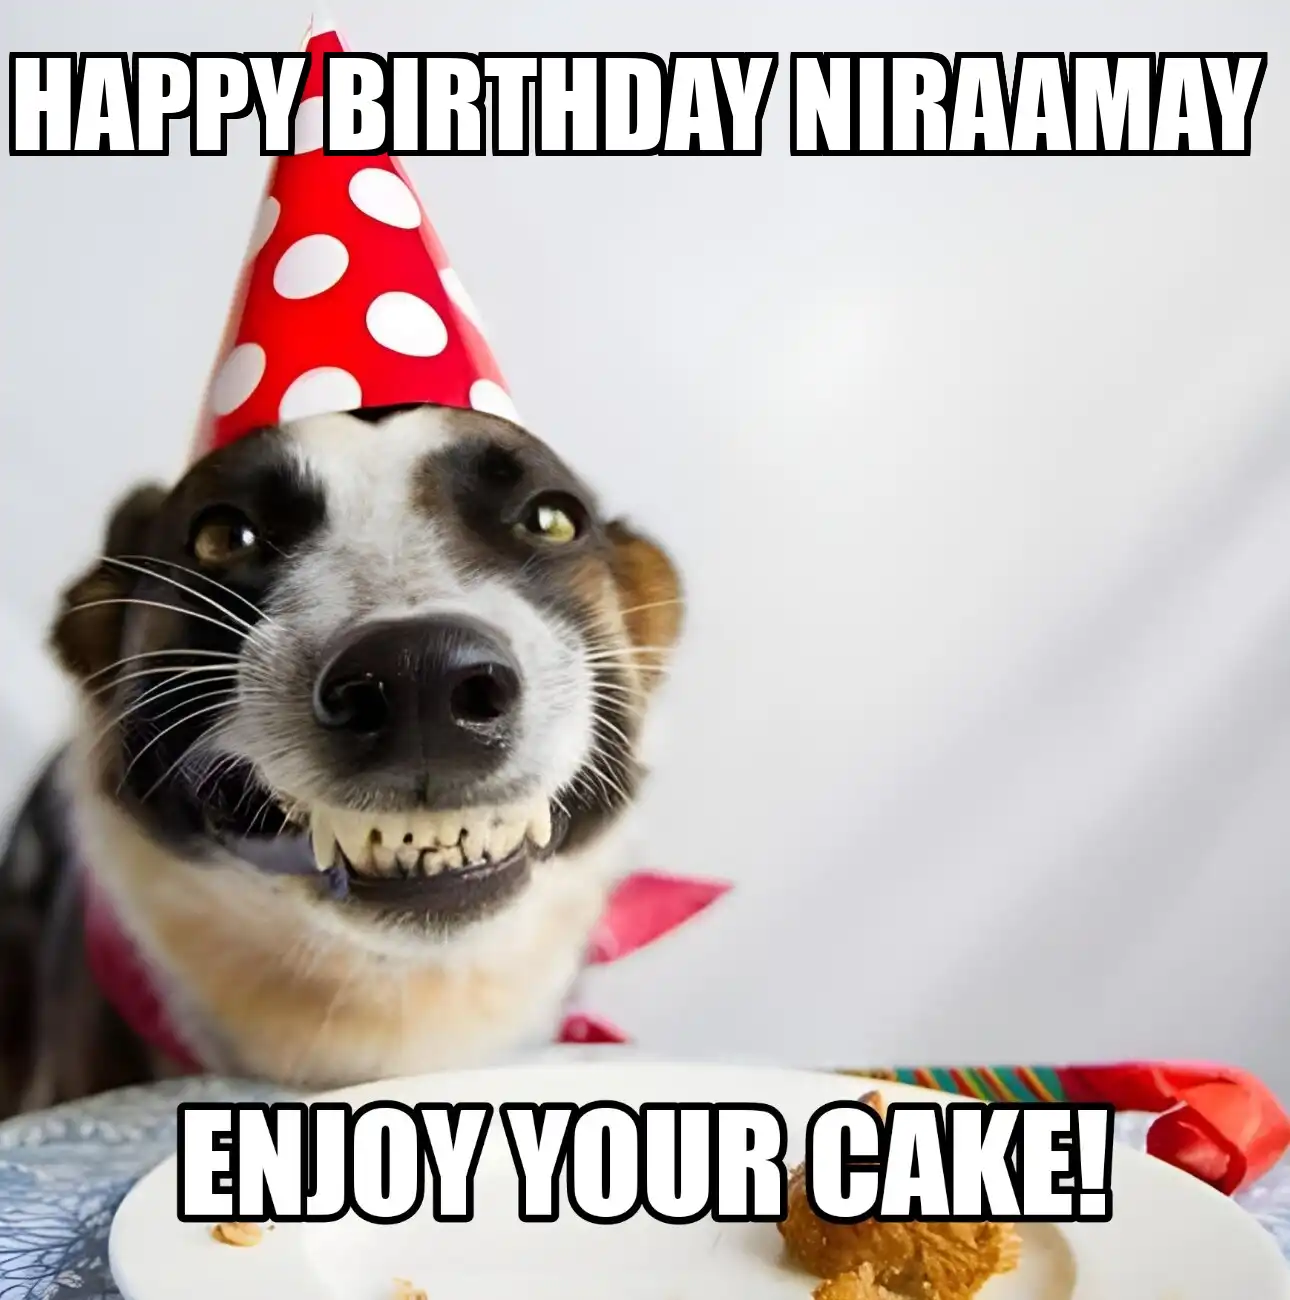 Happy Birthday Niraamay Enjoy Your Cake Dog Meme